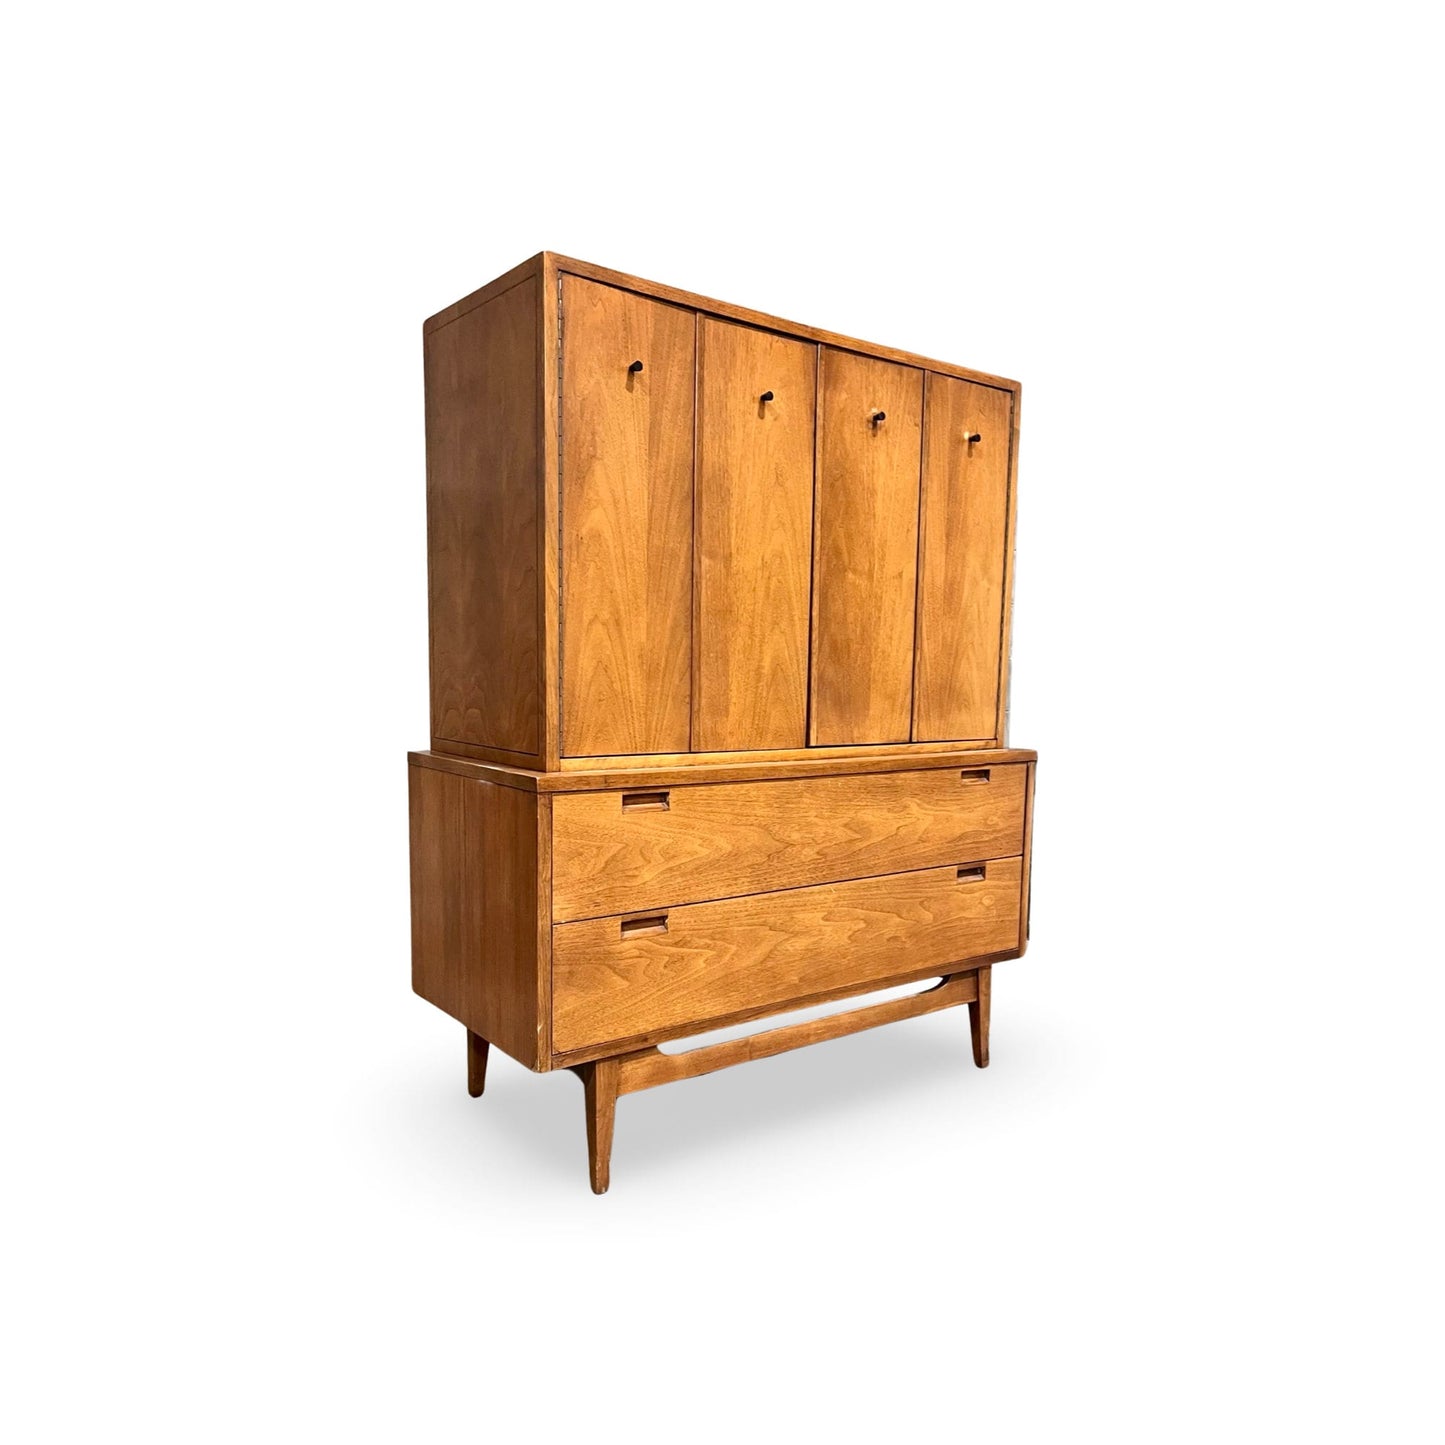 Vintage dresser blending American and Danish Modern styles, perfect for organization.